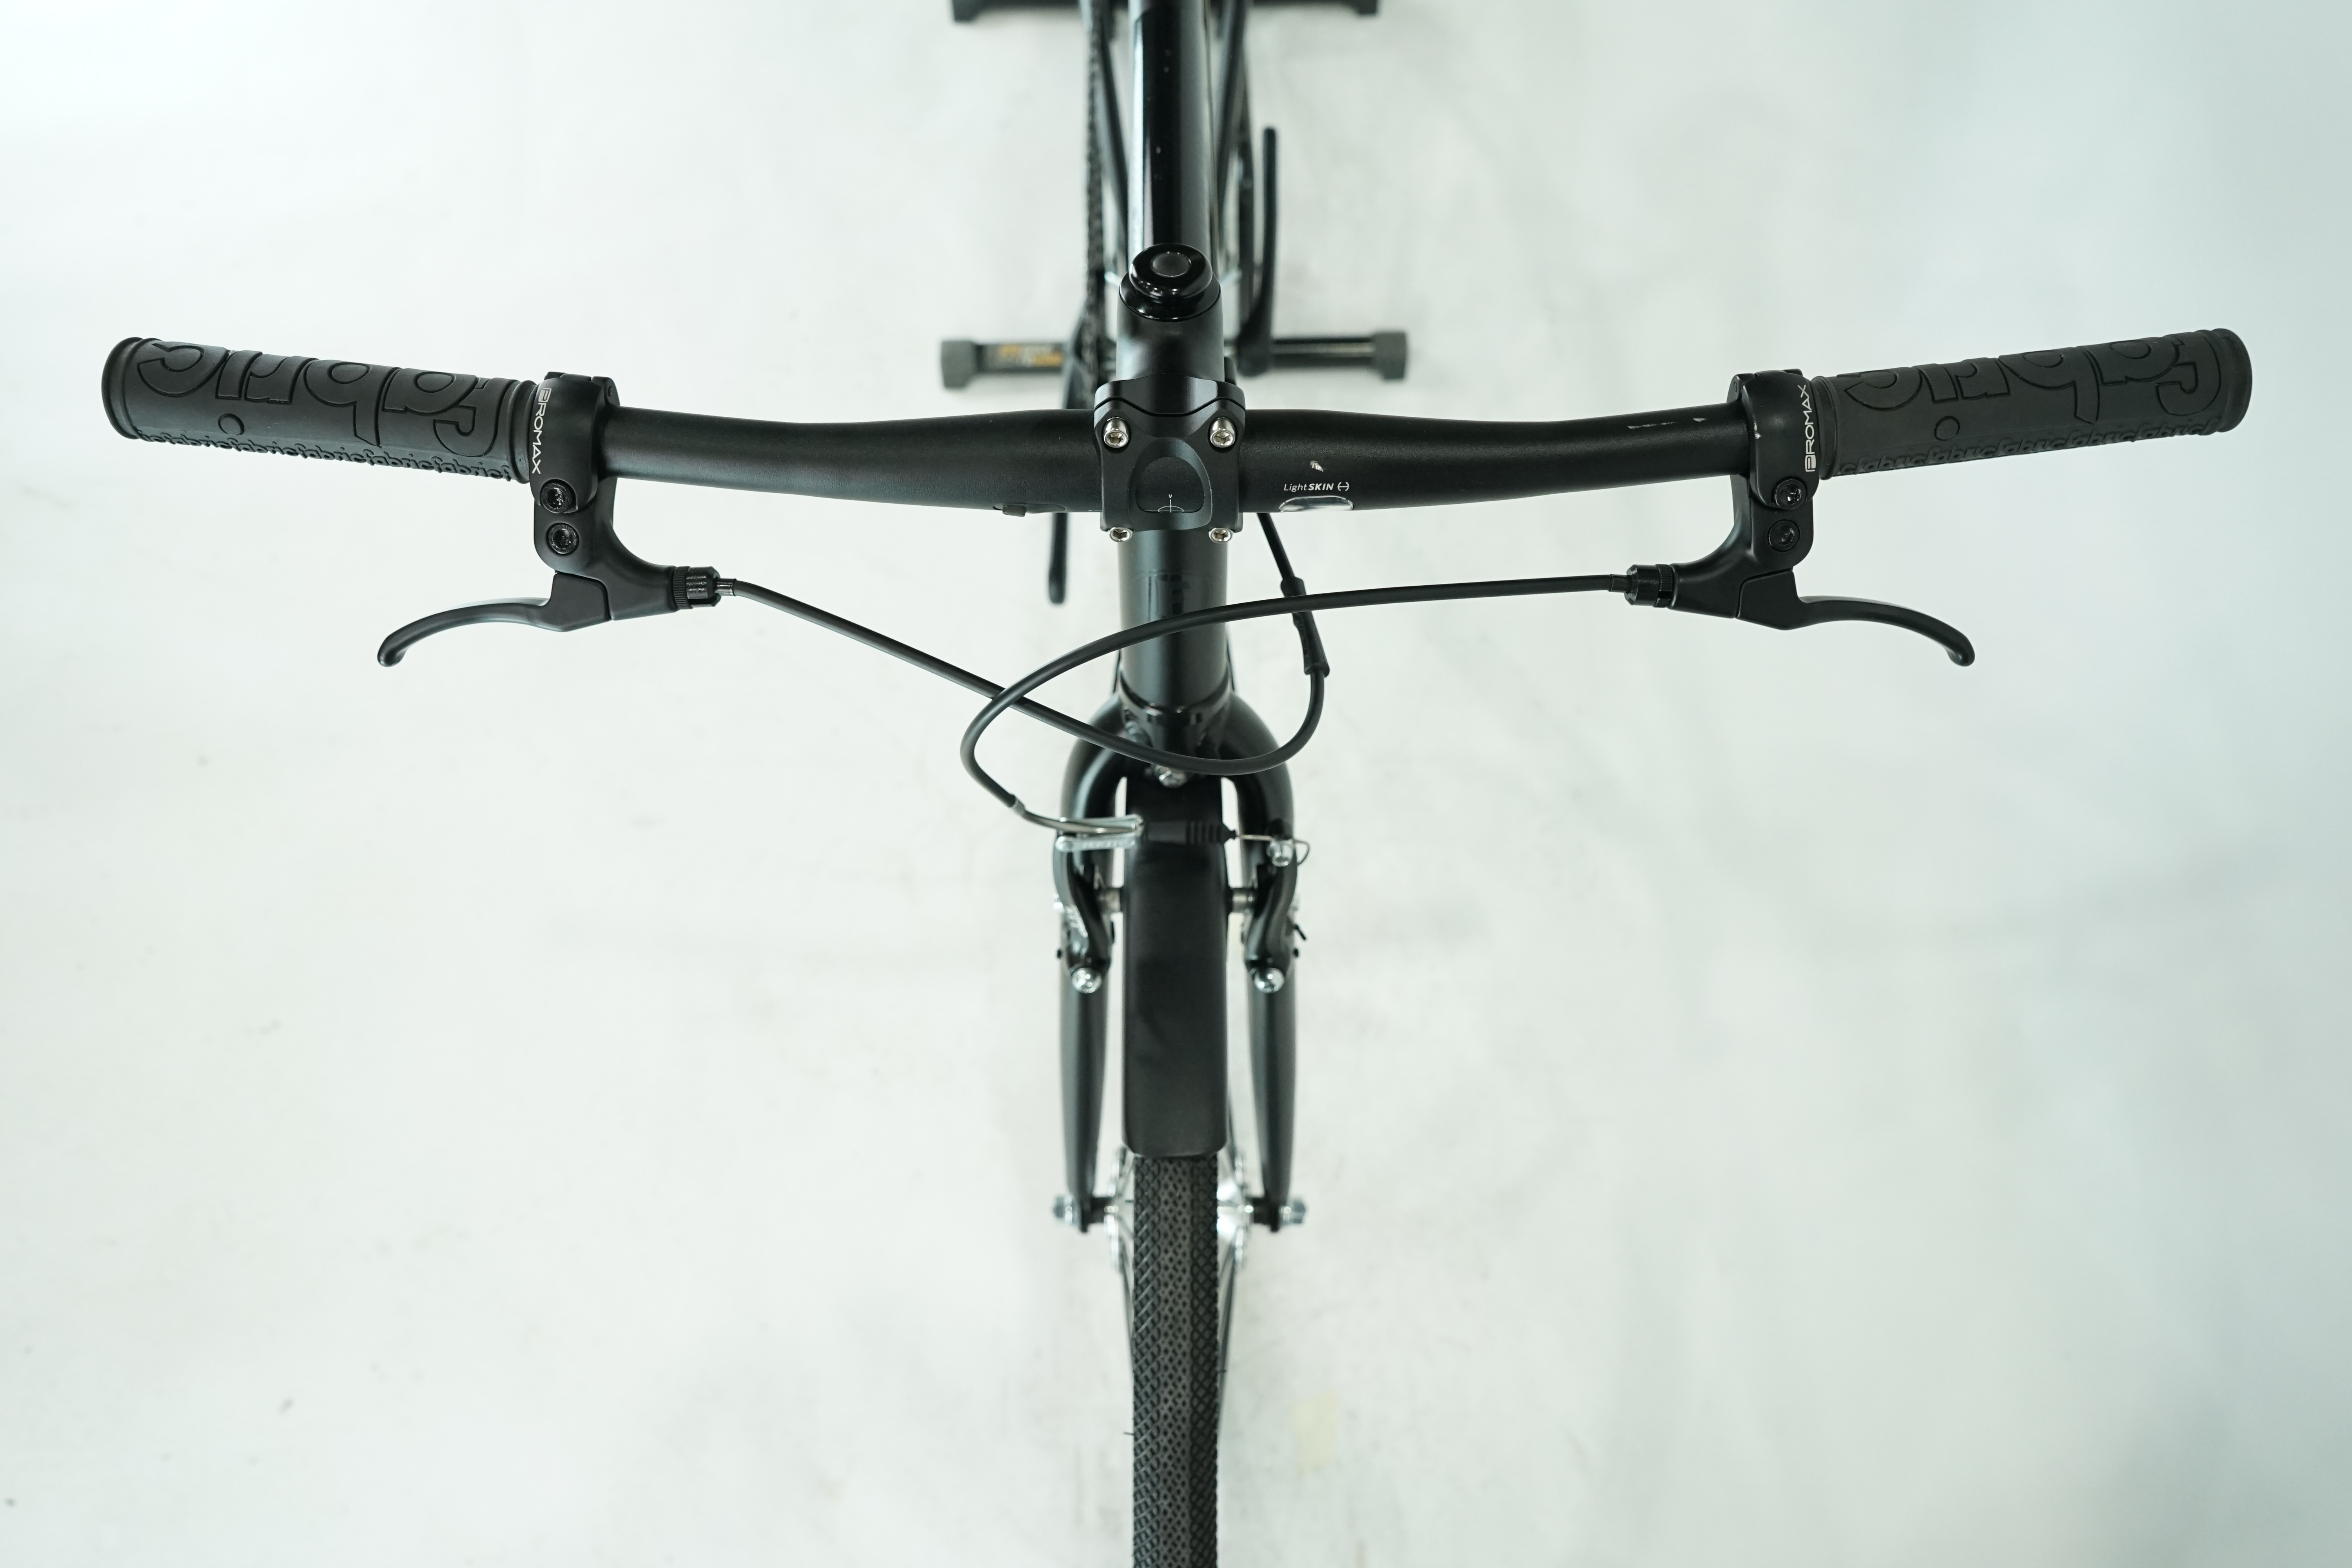 Fabricbike Lenker für Fixie Bike kaufen. Fahrradlenker